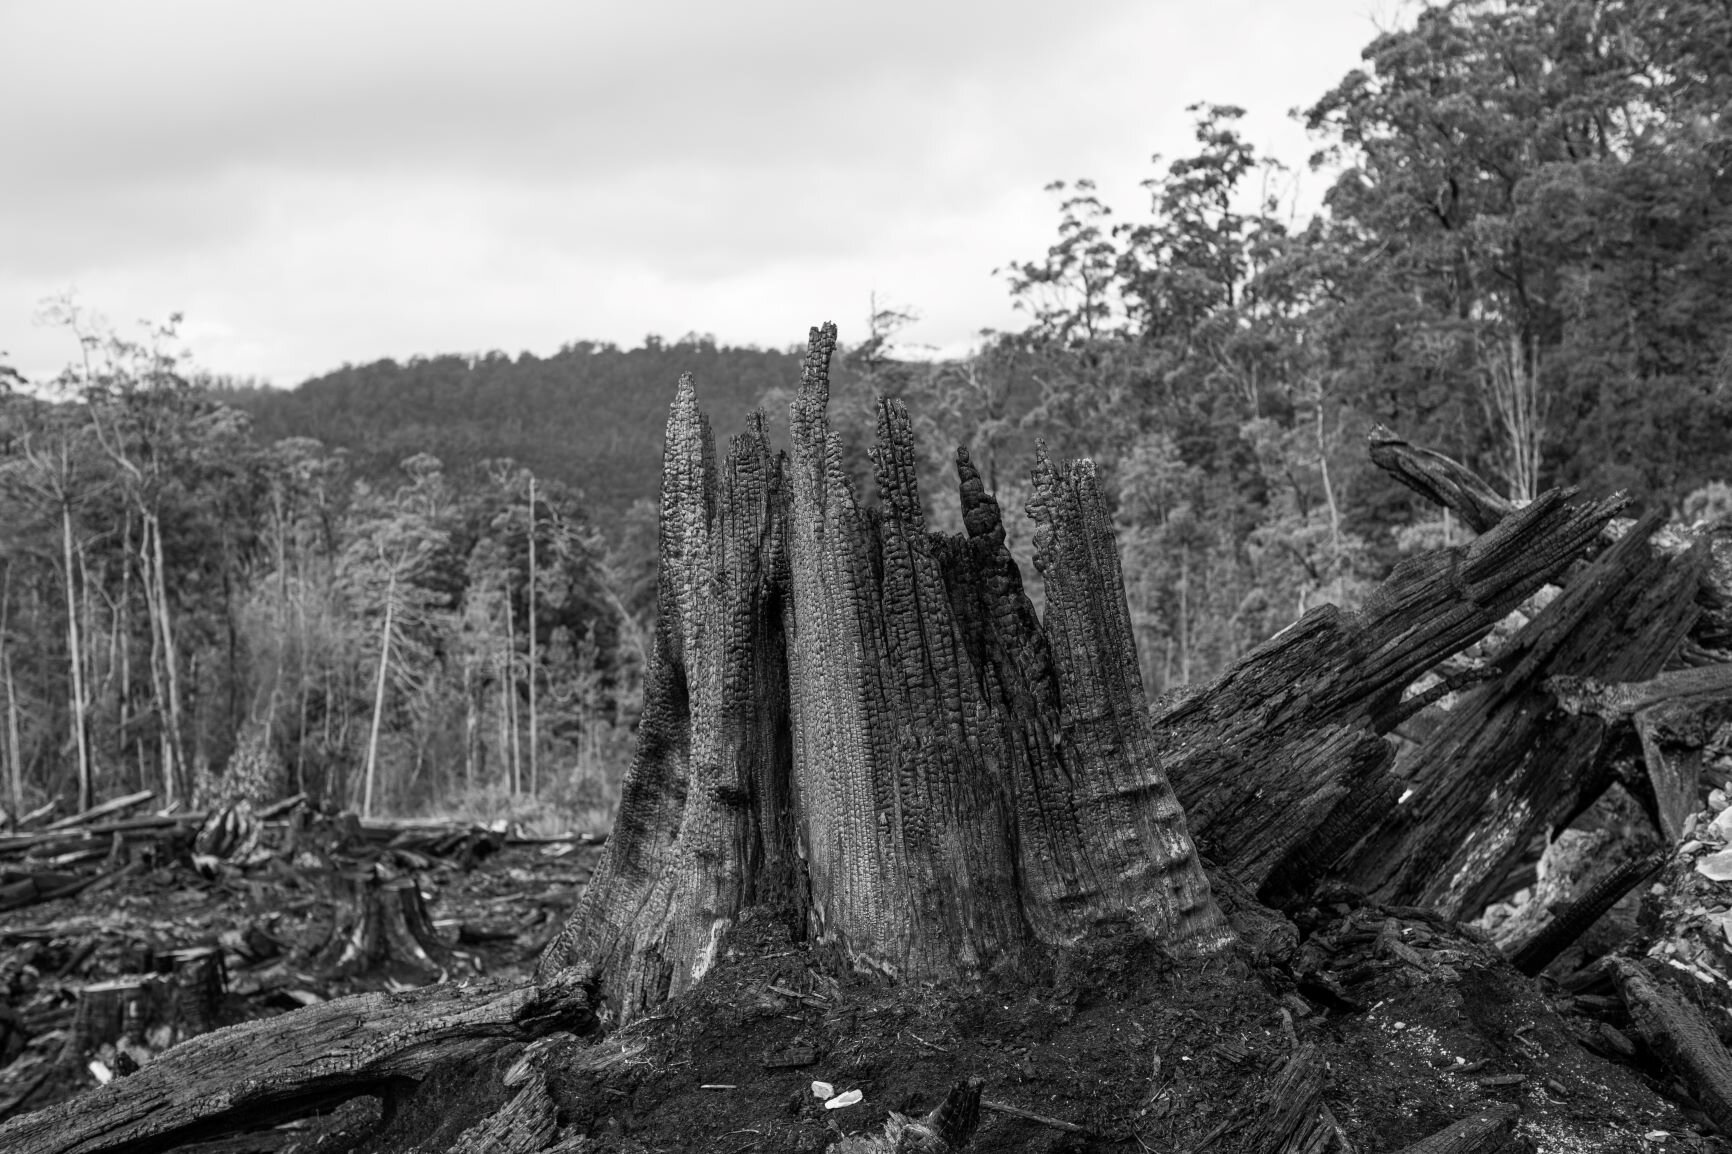  Old Growth rainforest in Tasmania is often clear-felled followed by an intense burn so native plants do not grow back. 